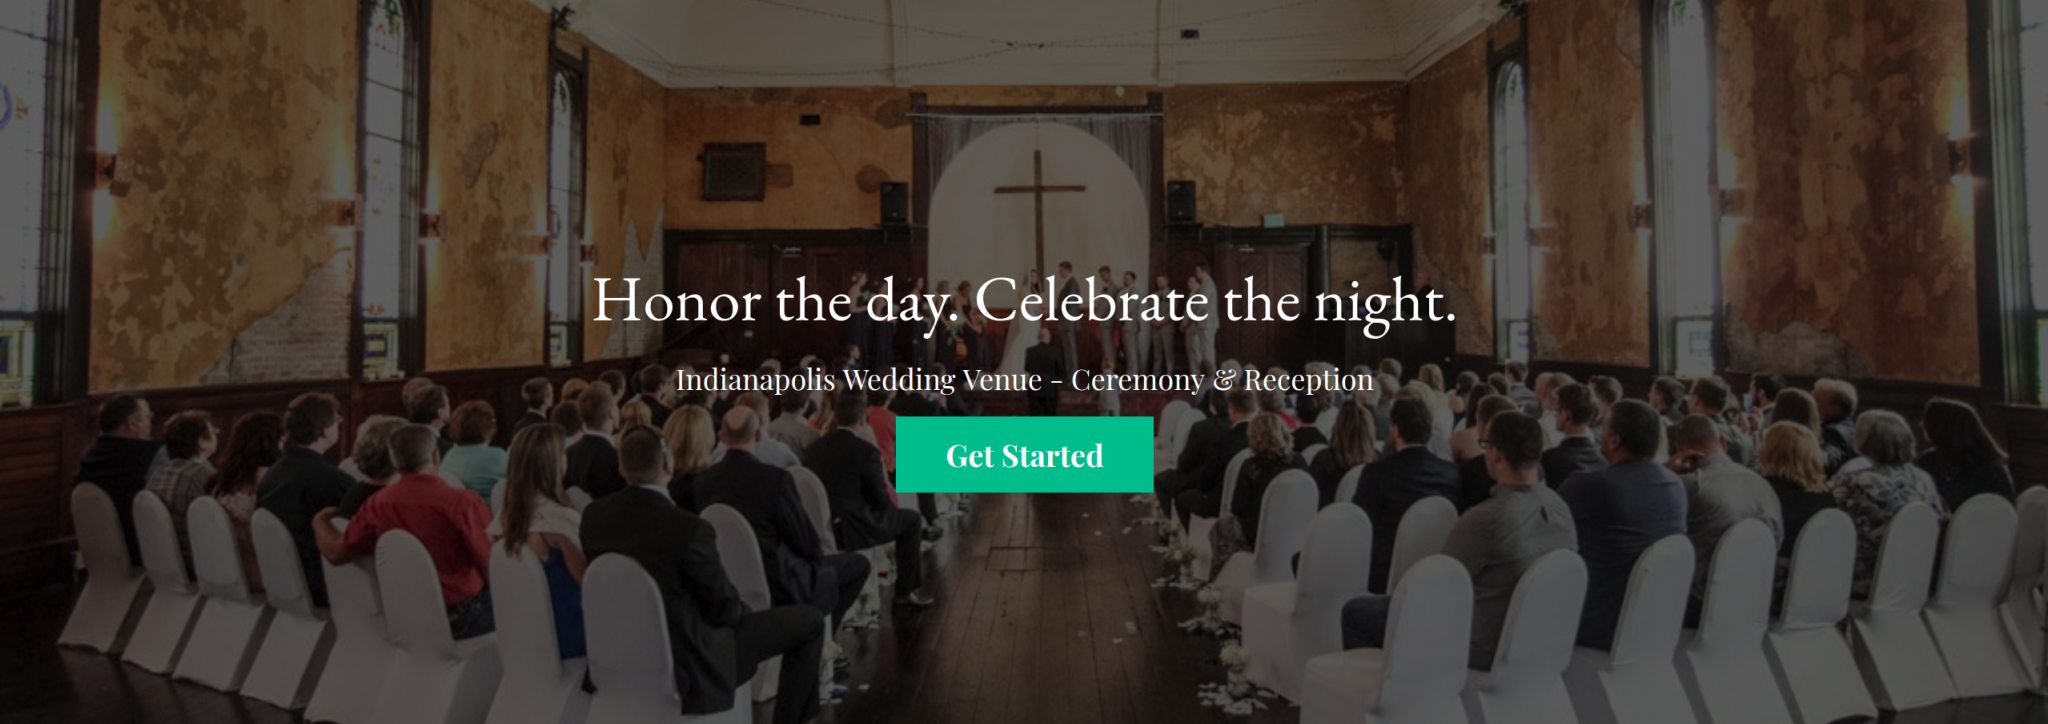 Home page of a wedding venue